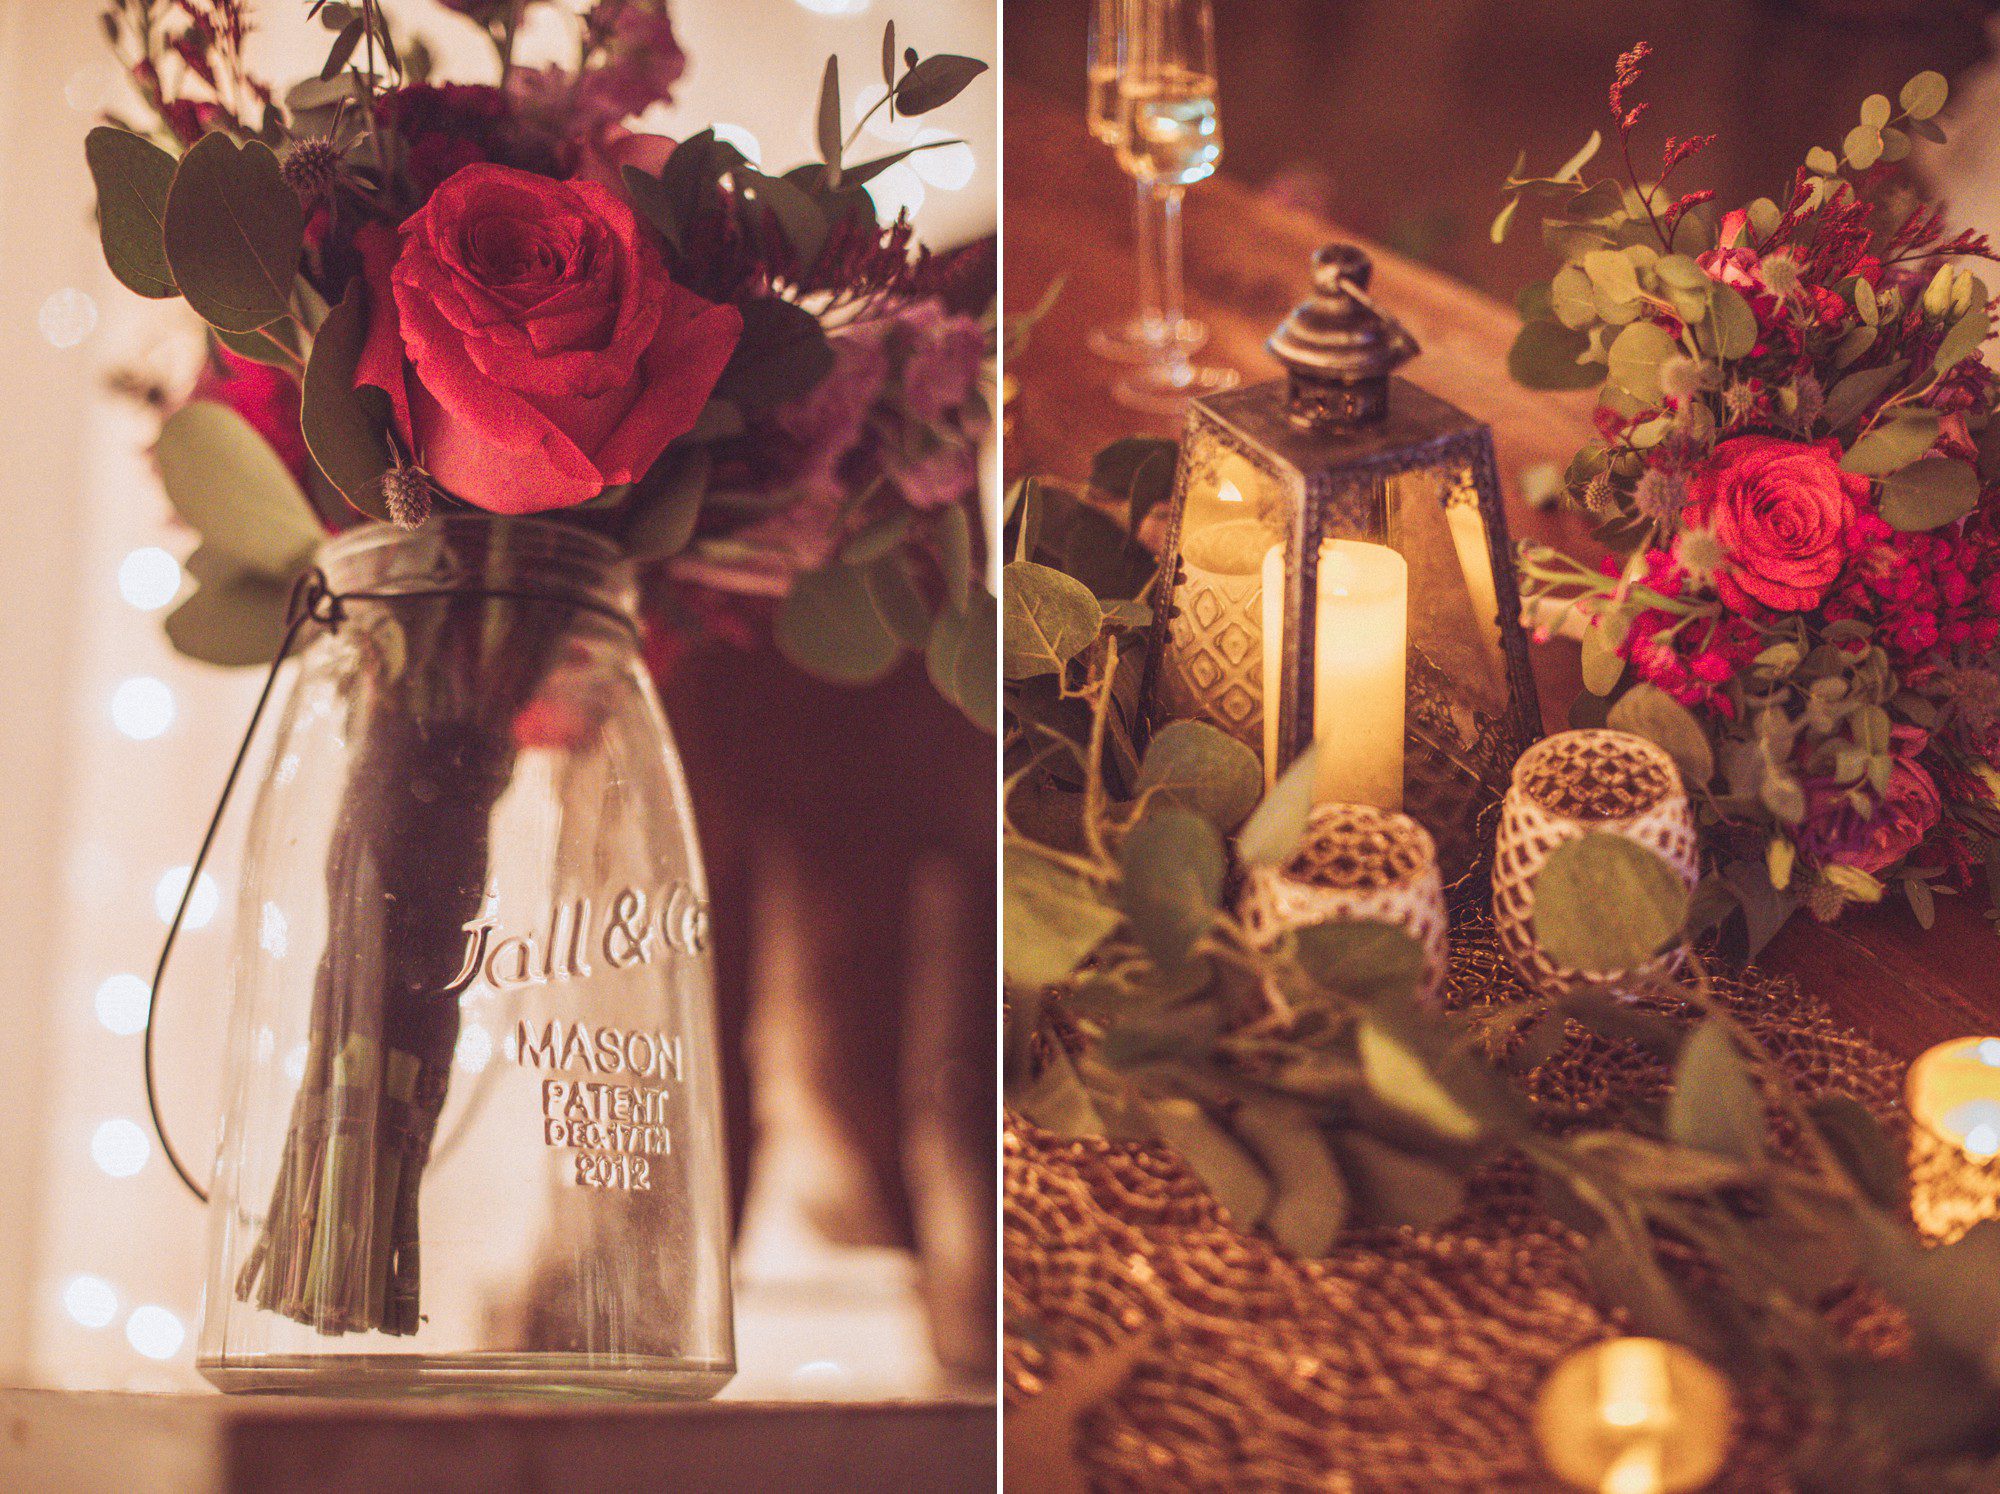 Romantic night florals and wedding decor